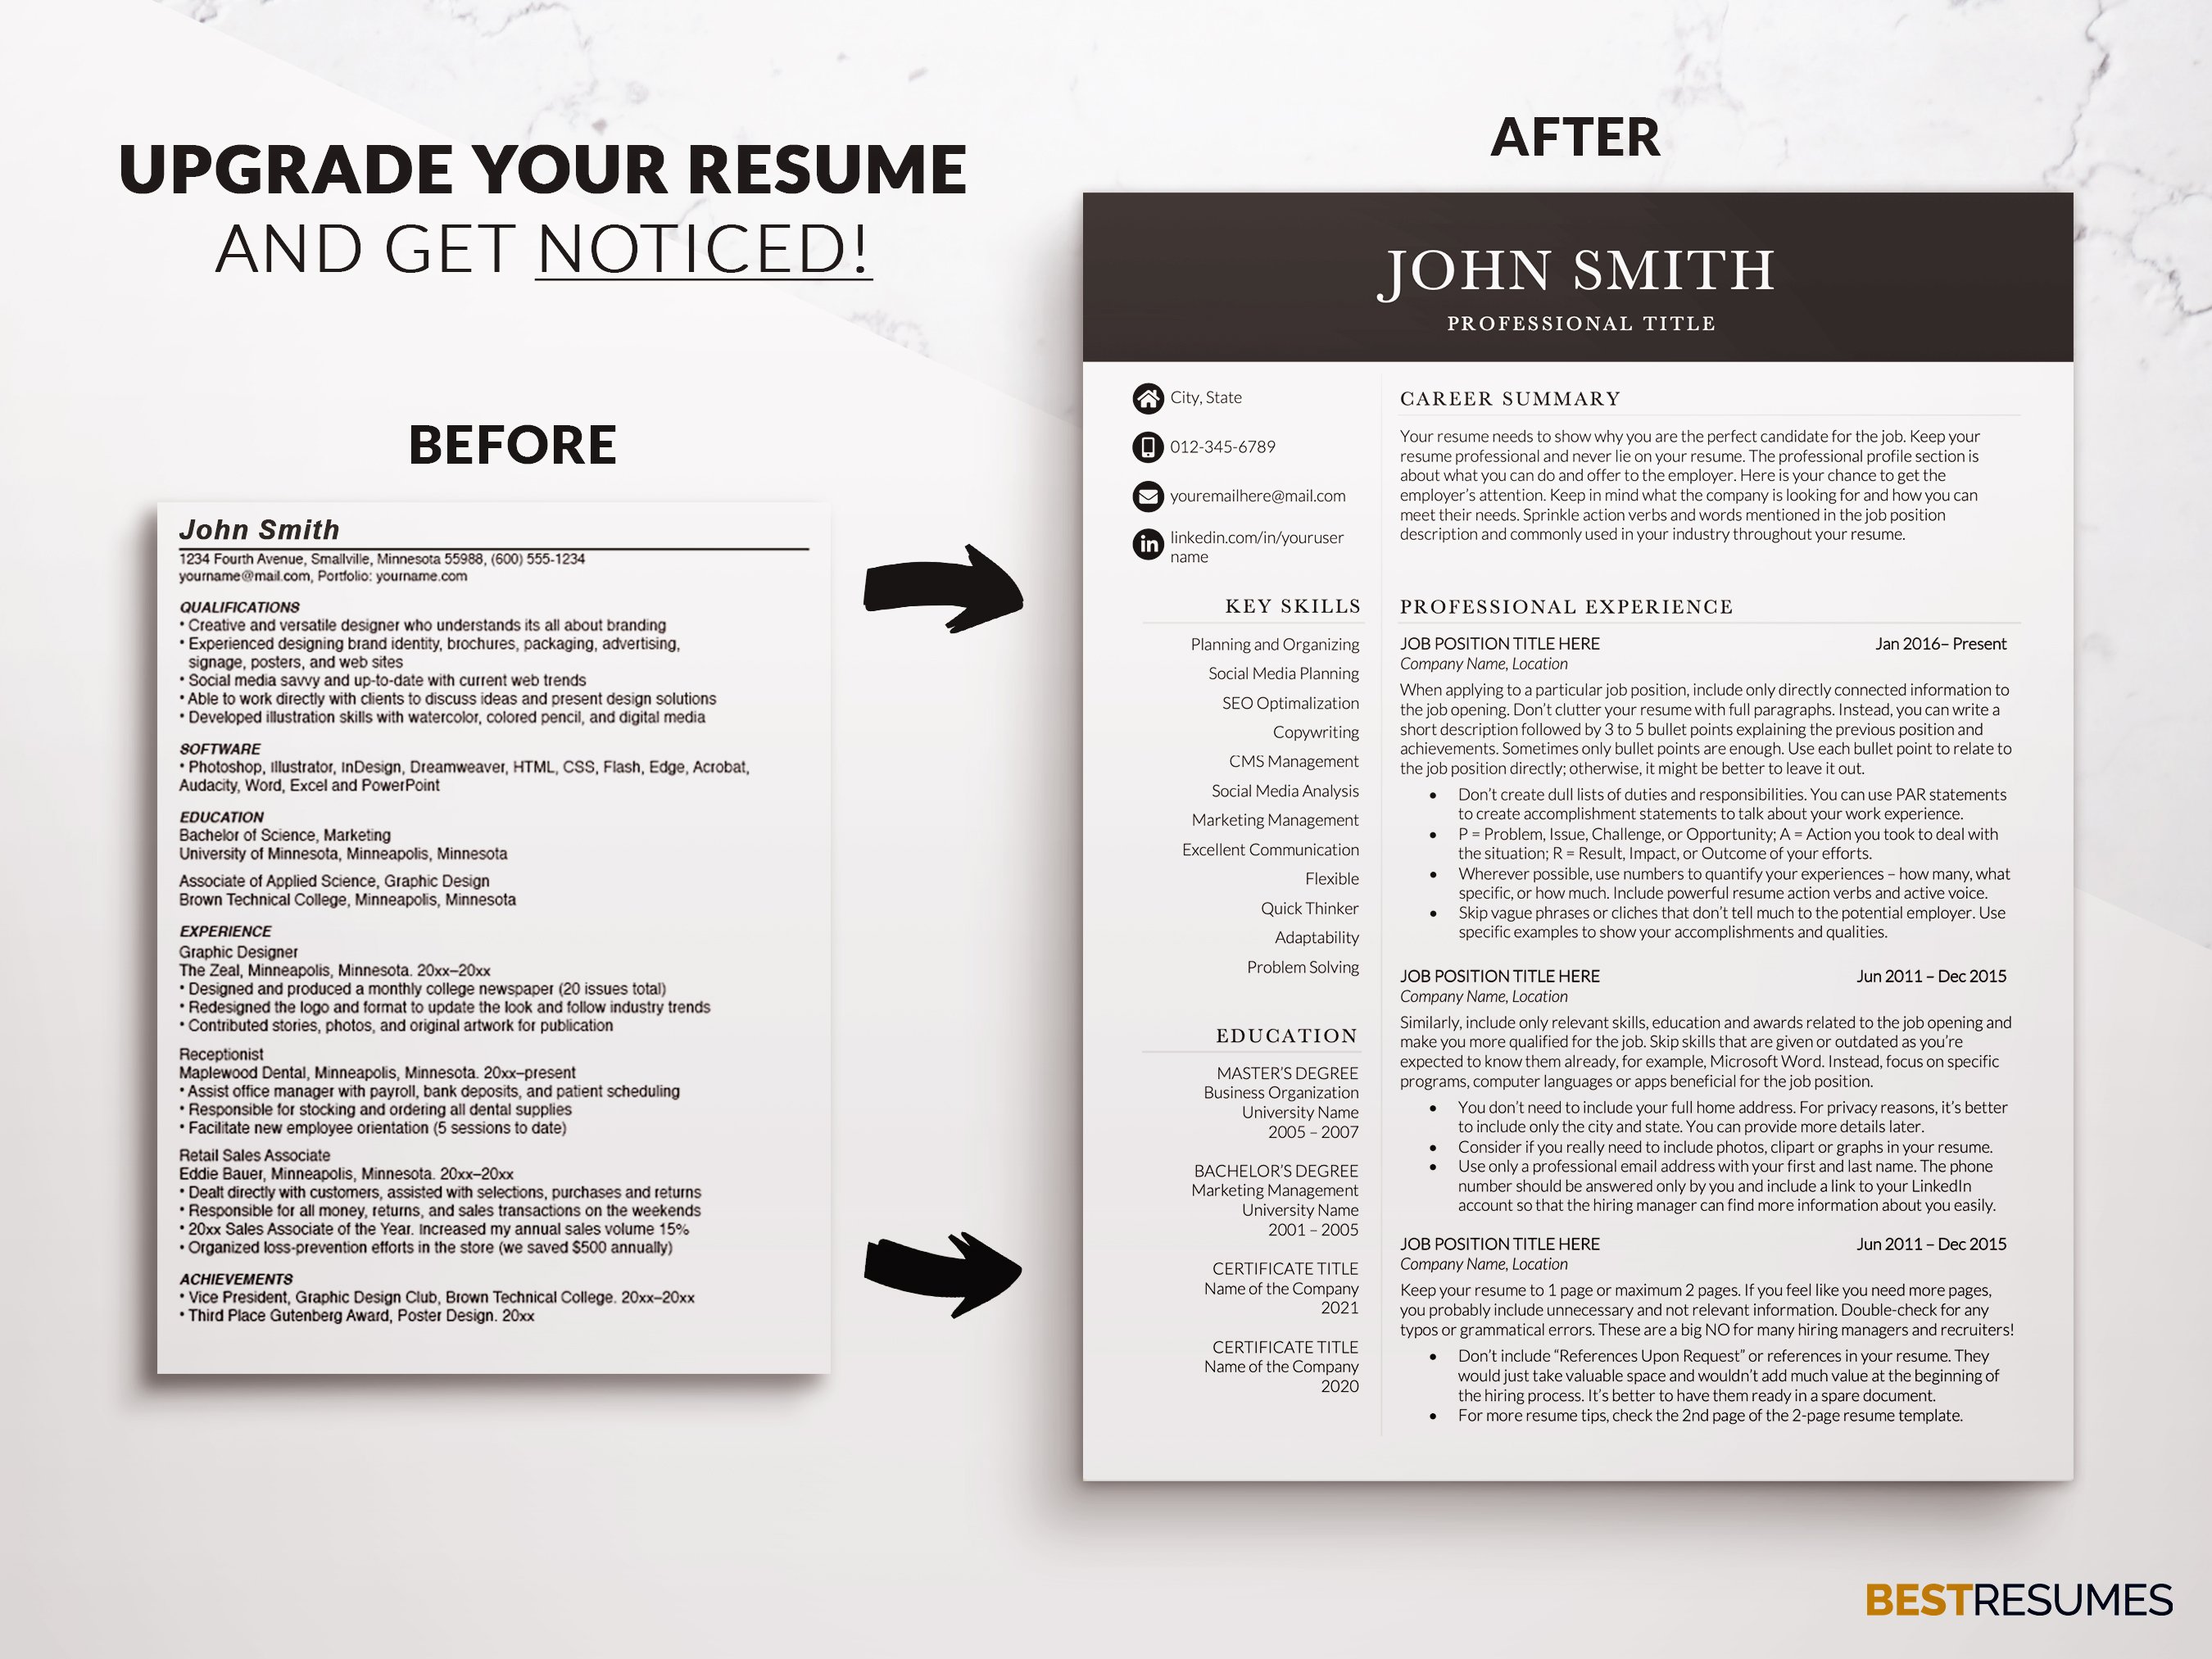 marketing resume template transform your resume john smith 824